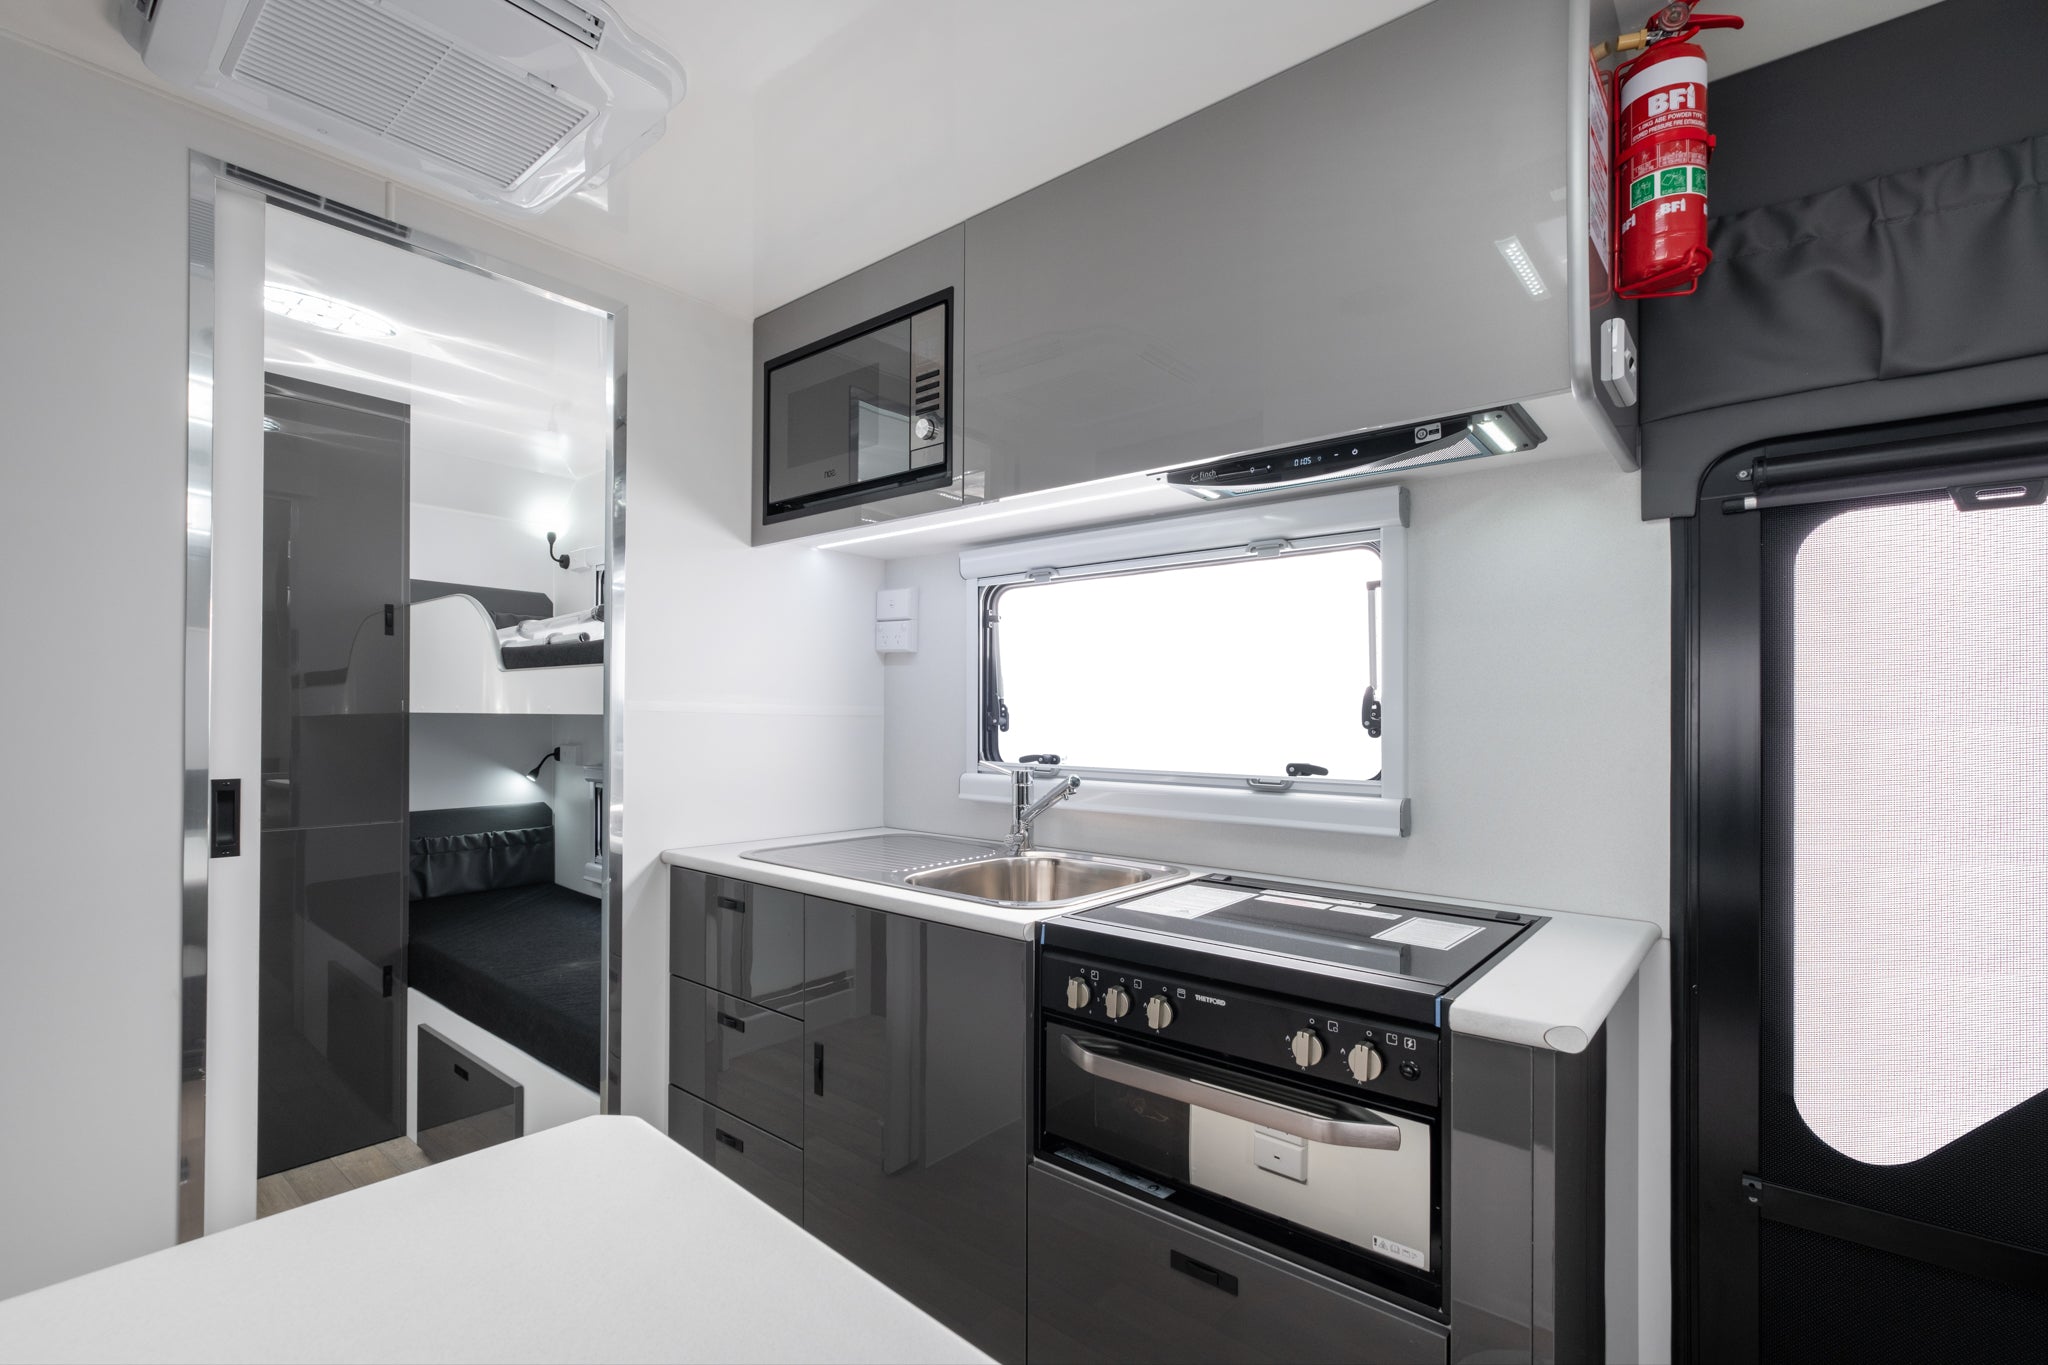 Coromal Thrill Seeker 18'6 Family caravan kitchen and kids bedroom view